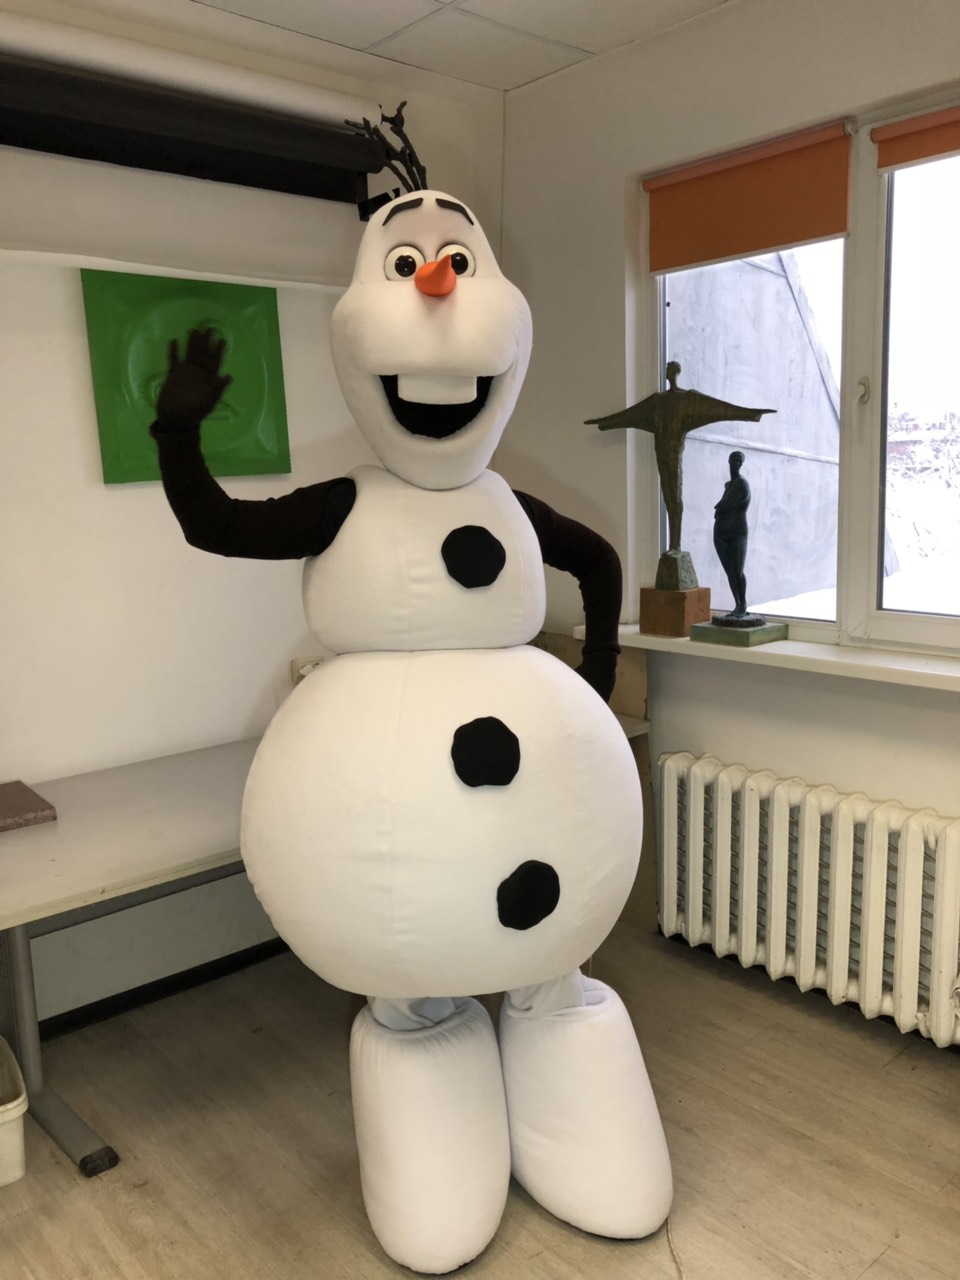 Olaf the snowman costume